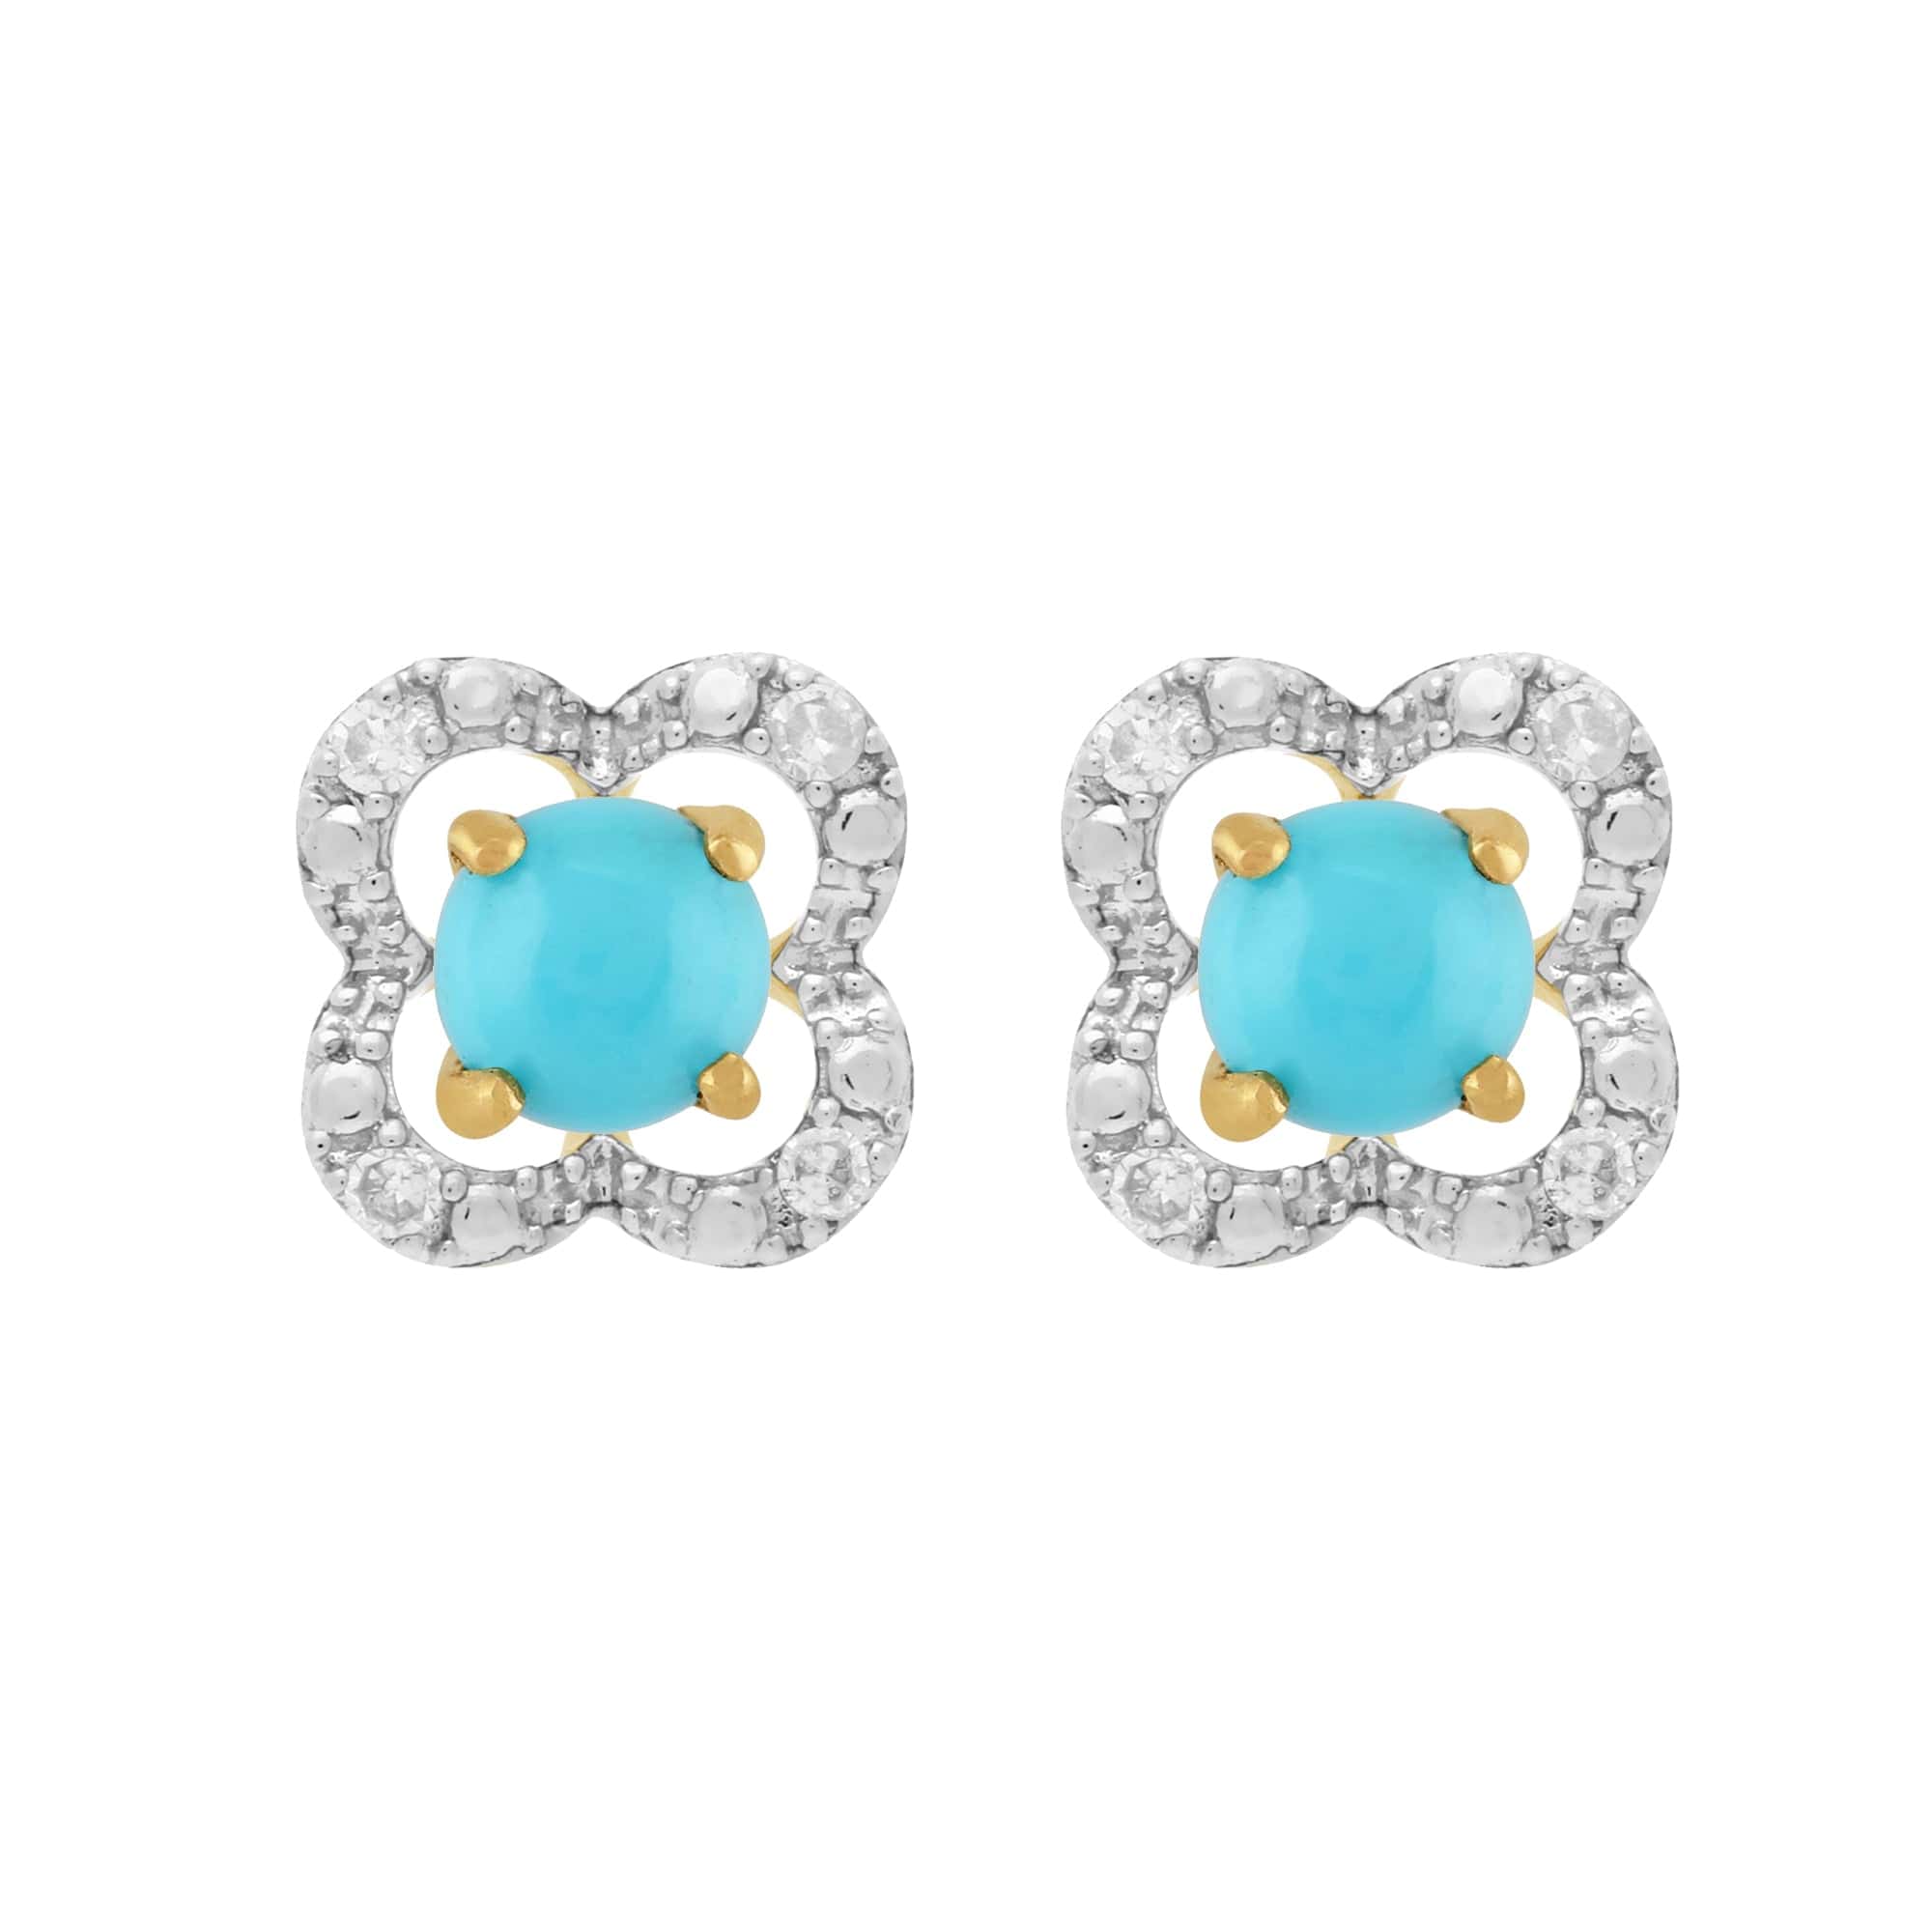 Classic Turquoise Stud Earrings & Diamond Floral Ear Jacket Image 1 